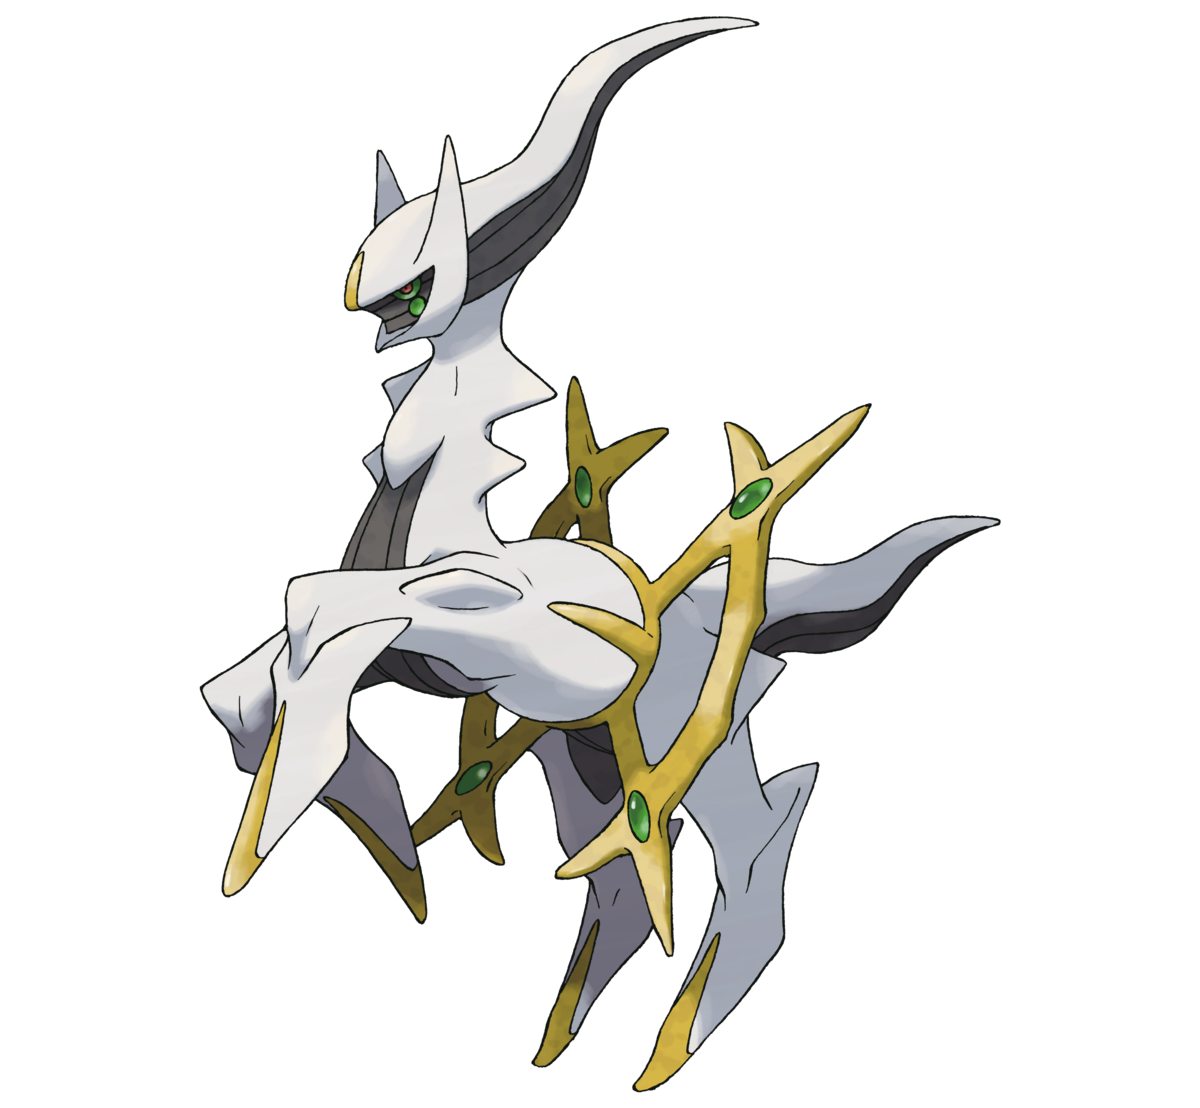 Leyendas Pokémon: Arceus - Guía para saber las fortalezas y debilidades de  cada tipo